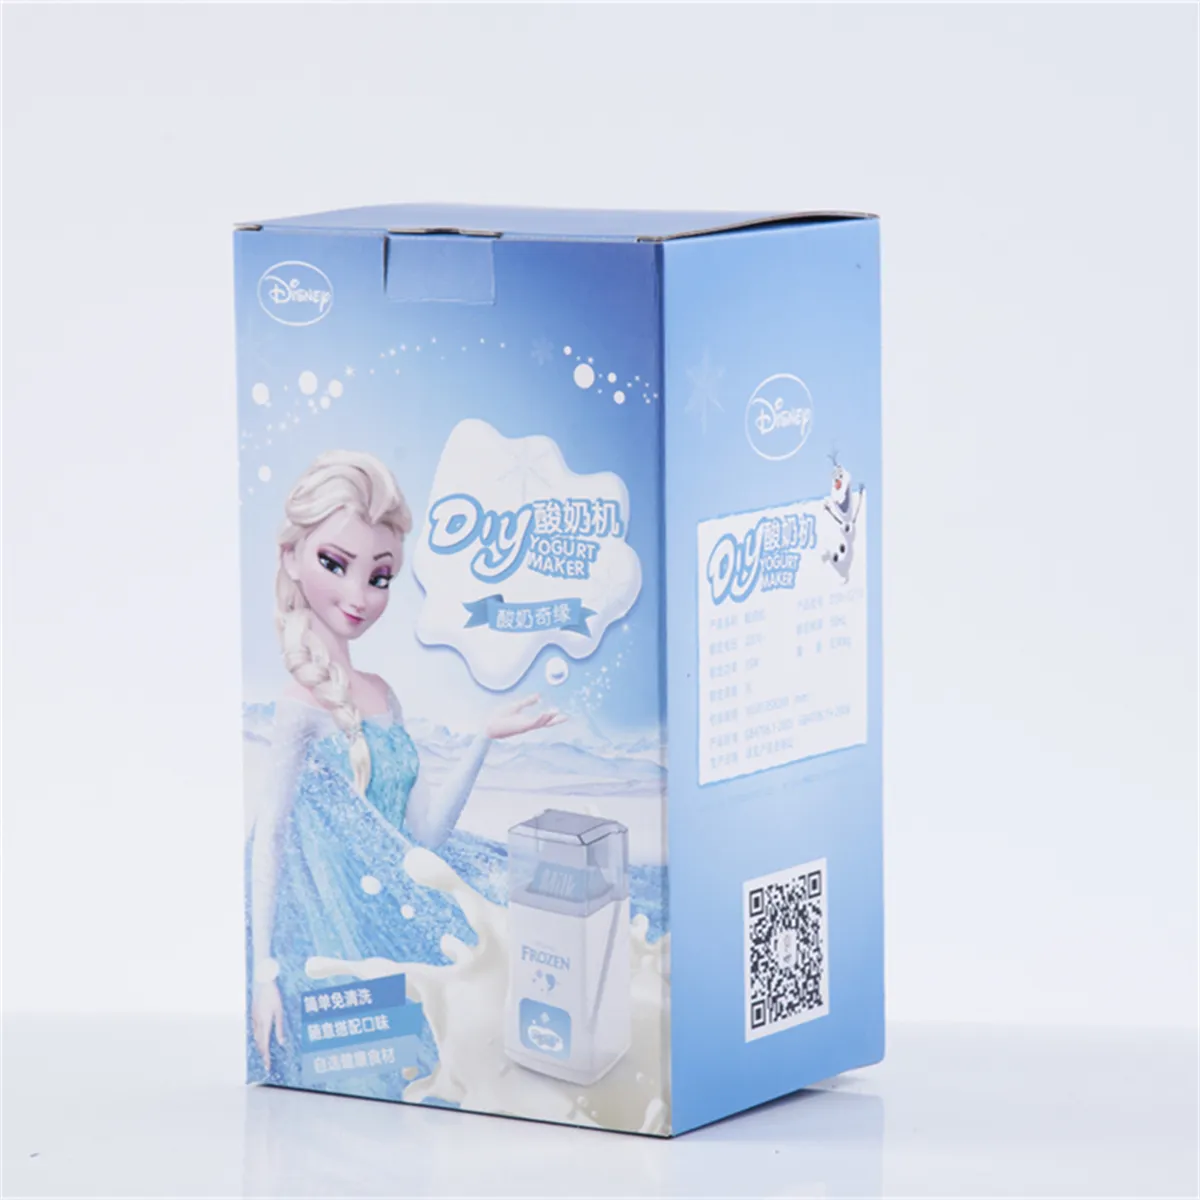 Niedriger Preis Verkauf Joghurt hersteller Papier verpackungs box Farbdruck verpackung Geschenk box